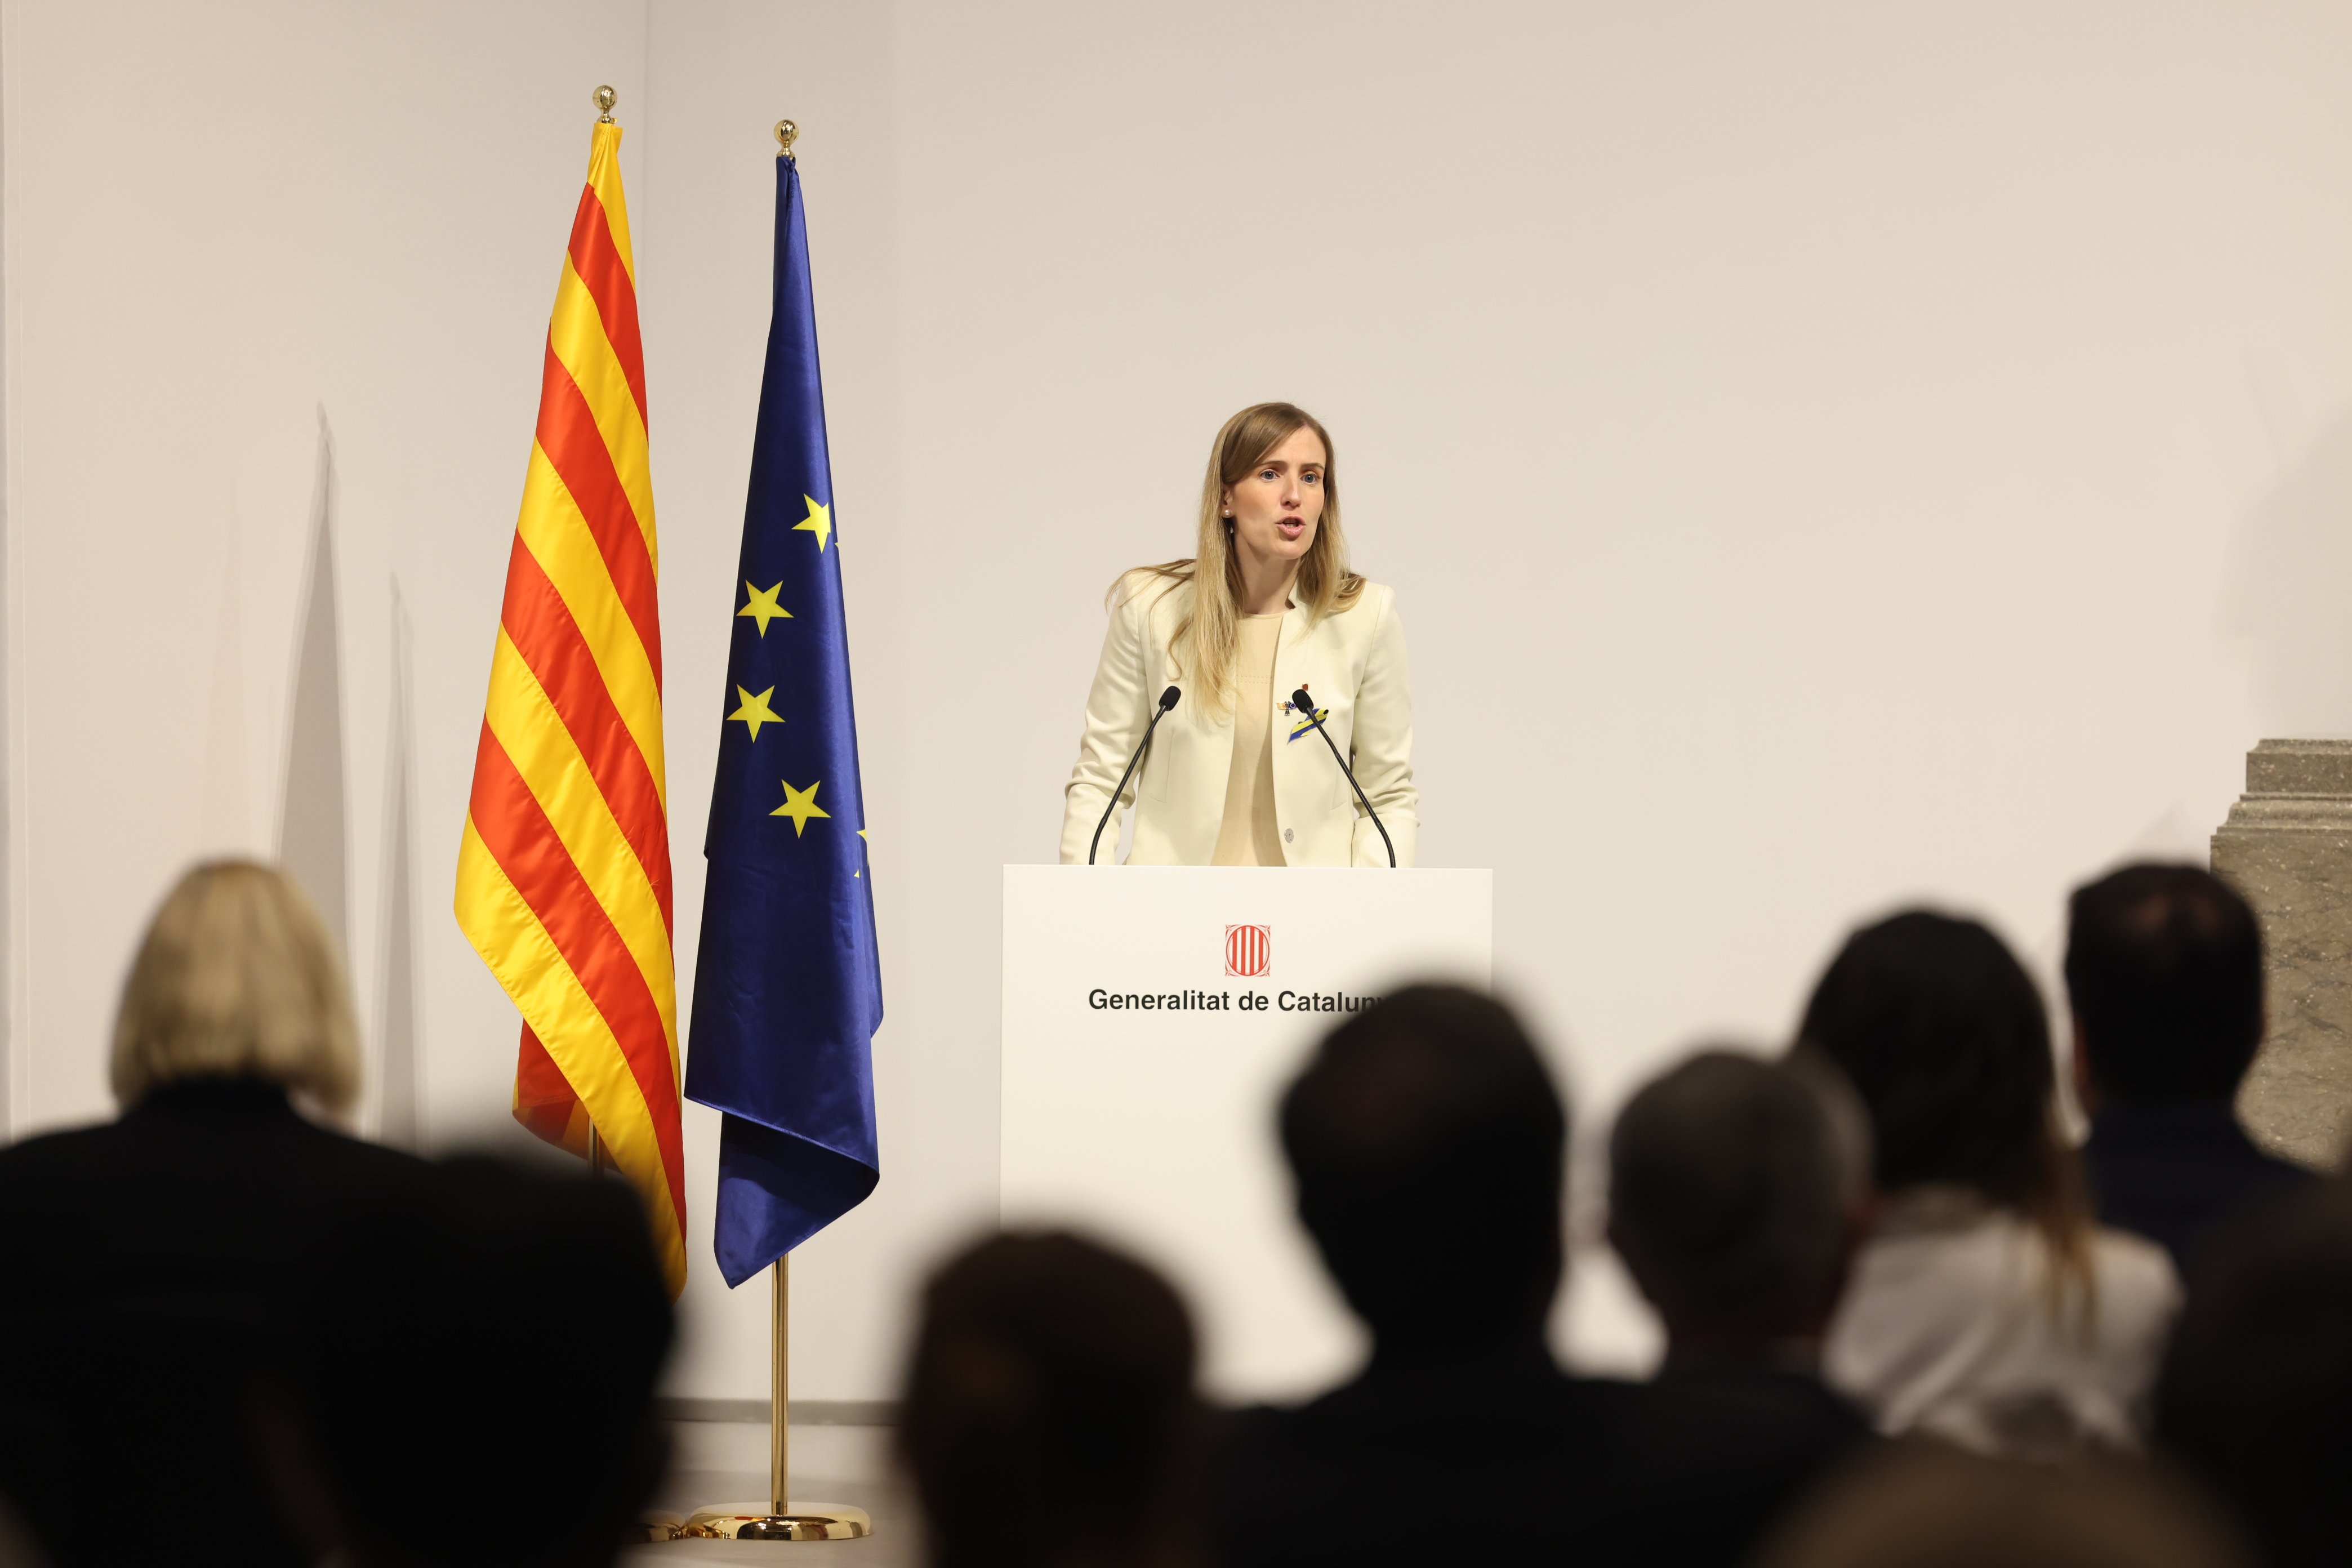 El clamor de Alsina a la UE para que escuche la voz de Catalunya: "No somos una amenaza"